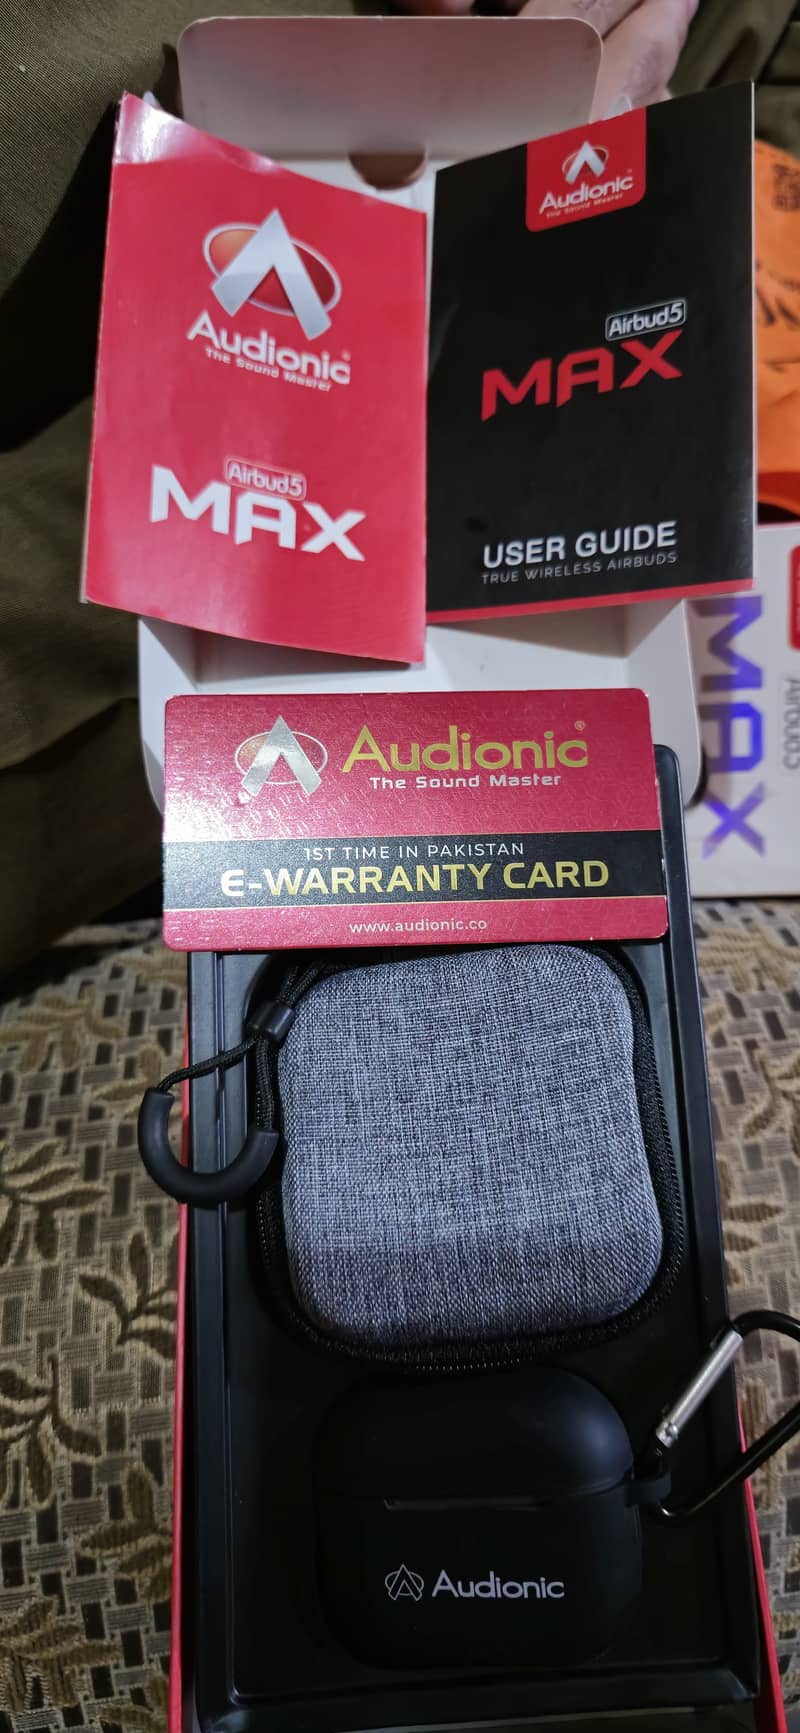 Audionic Airbud 5 Max 1